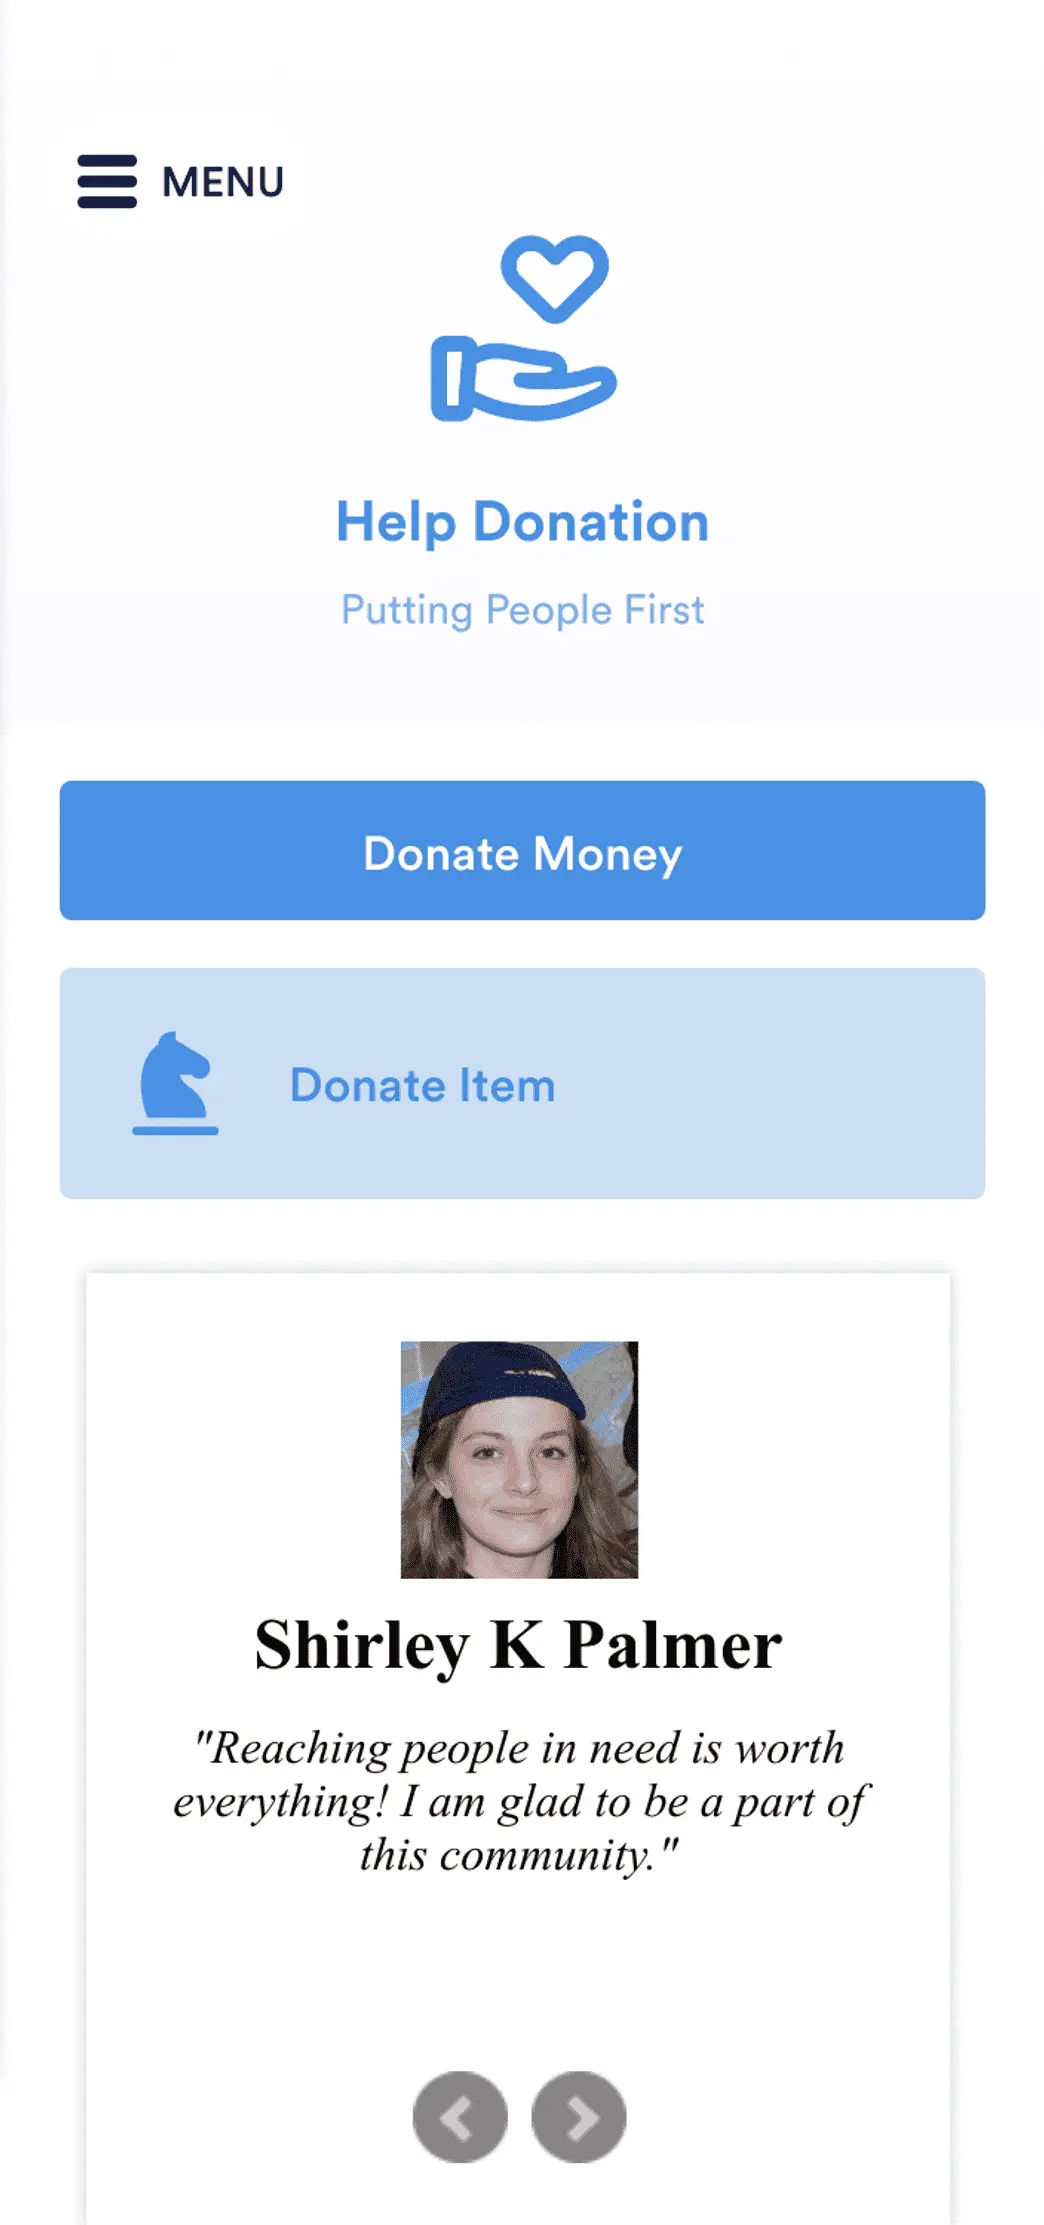 Donation App